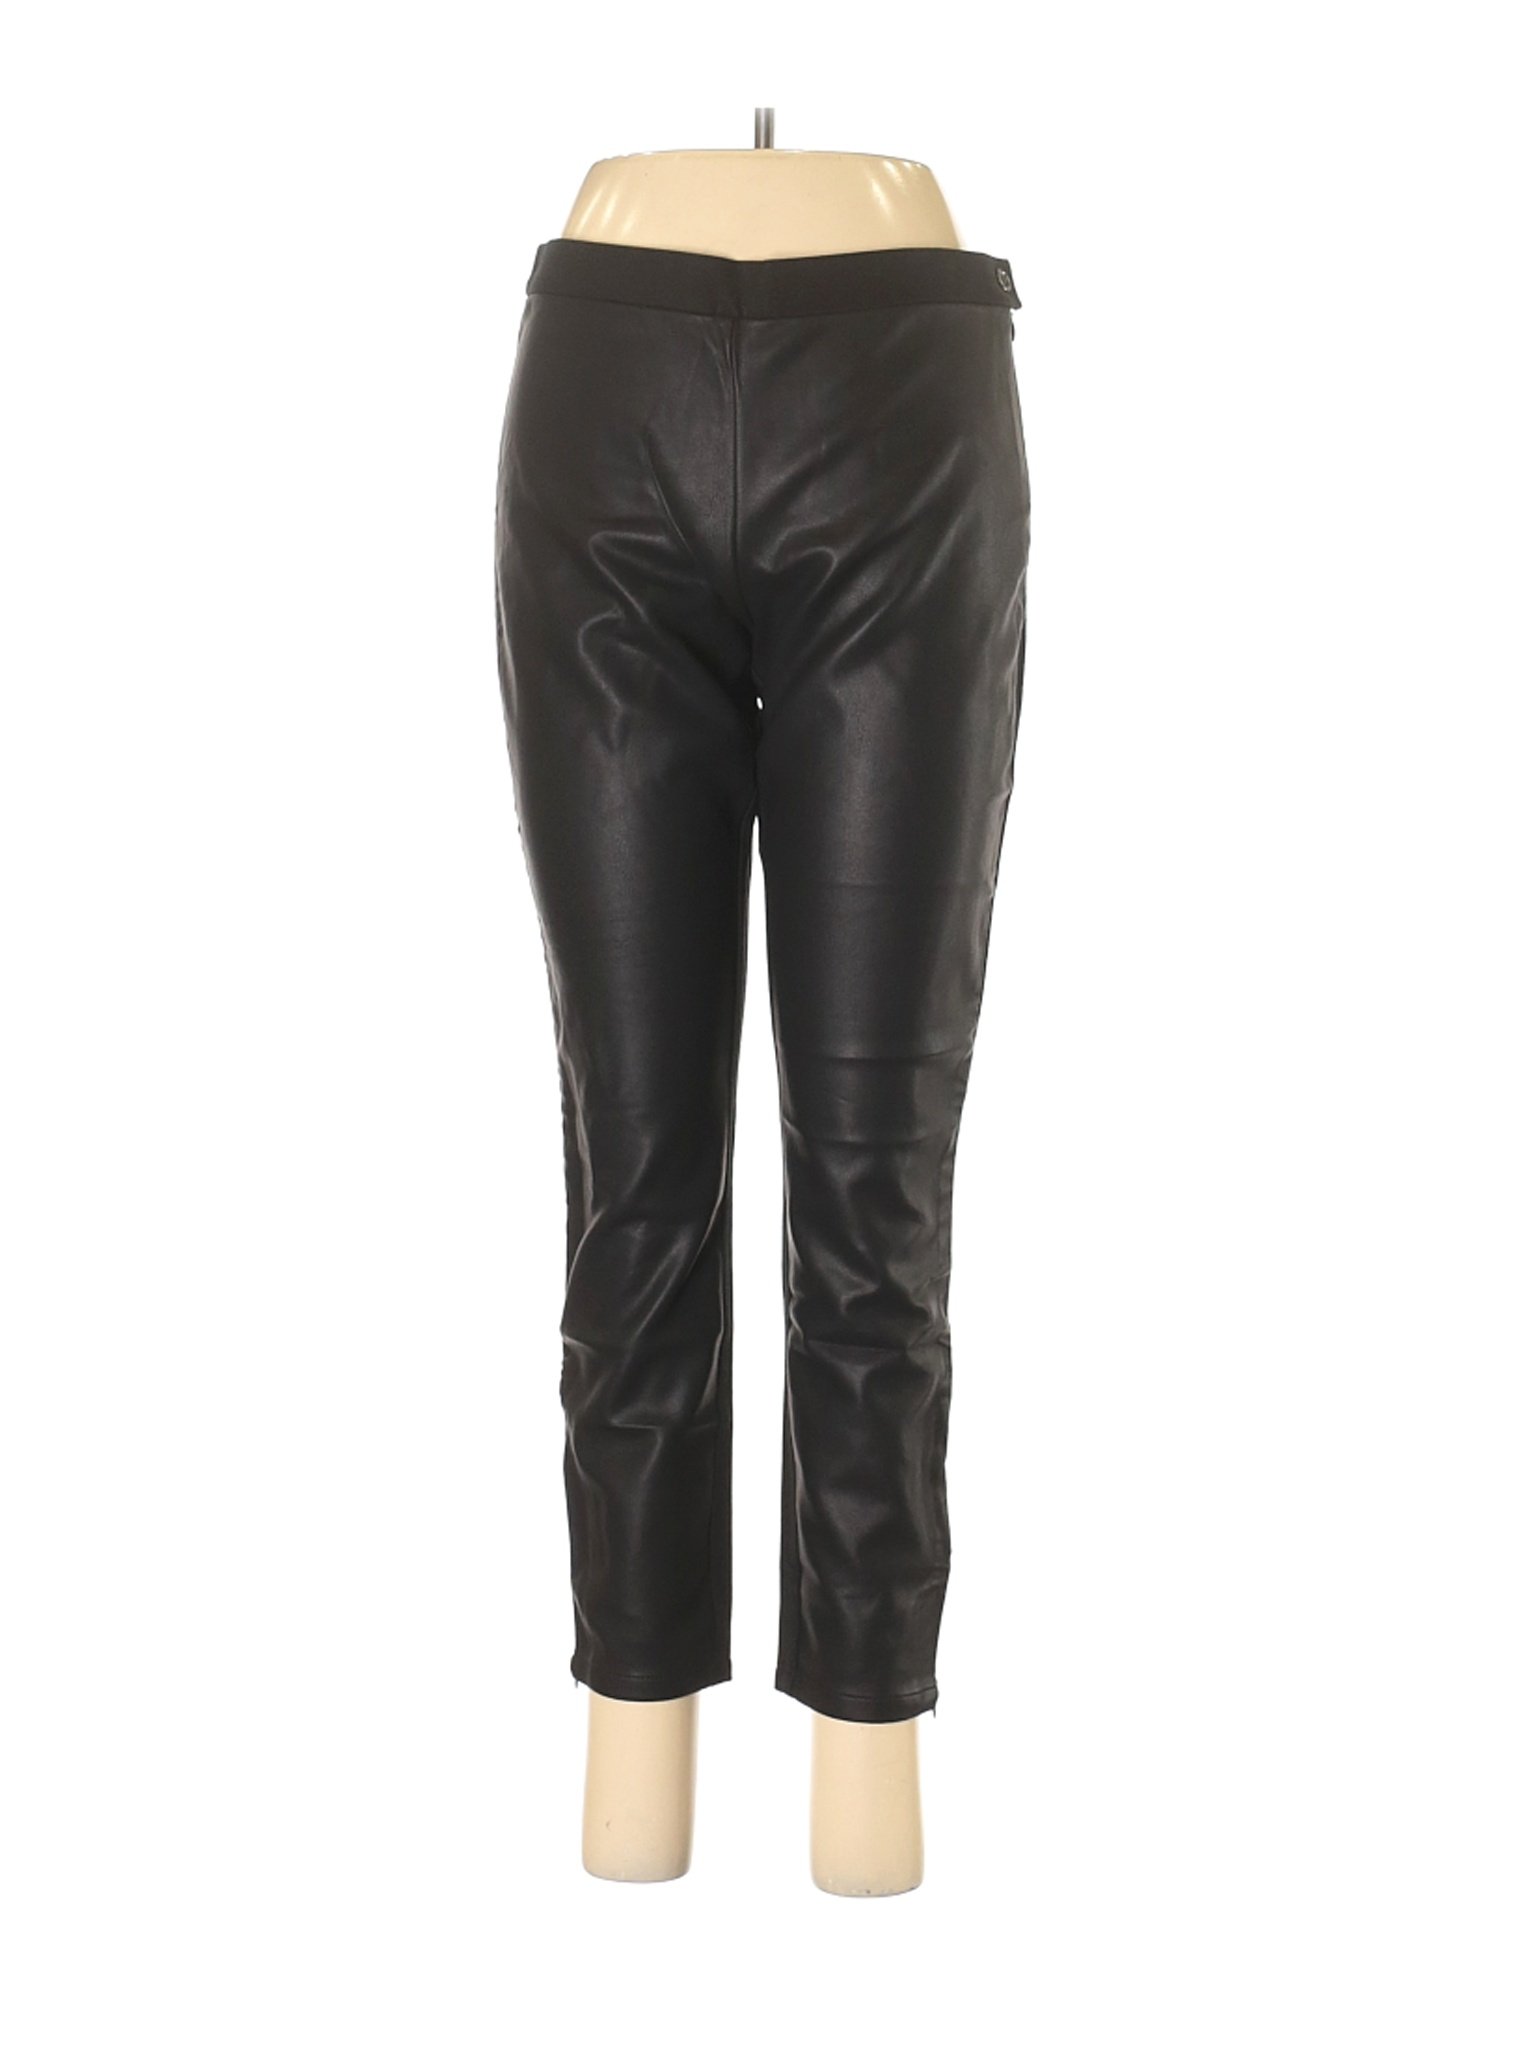 Banana Republic Women Black Leather Pants 8 Petites | eBay